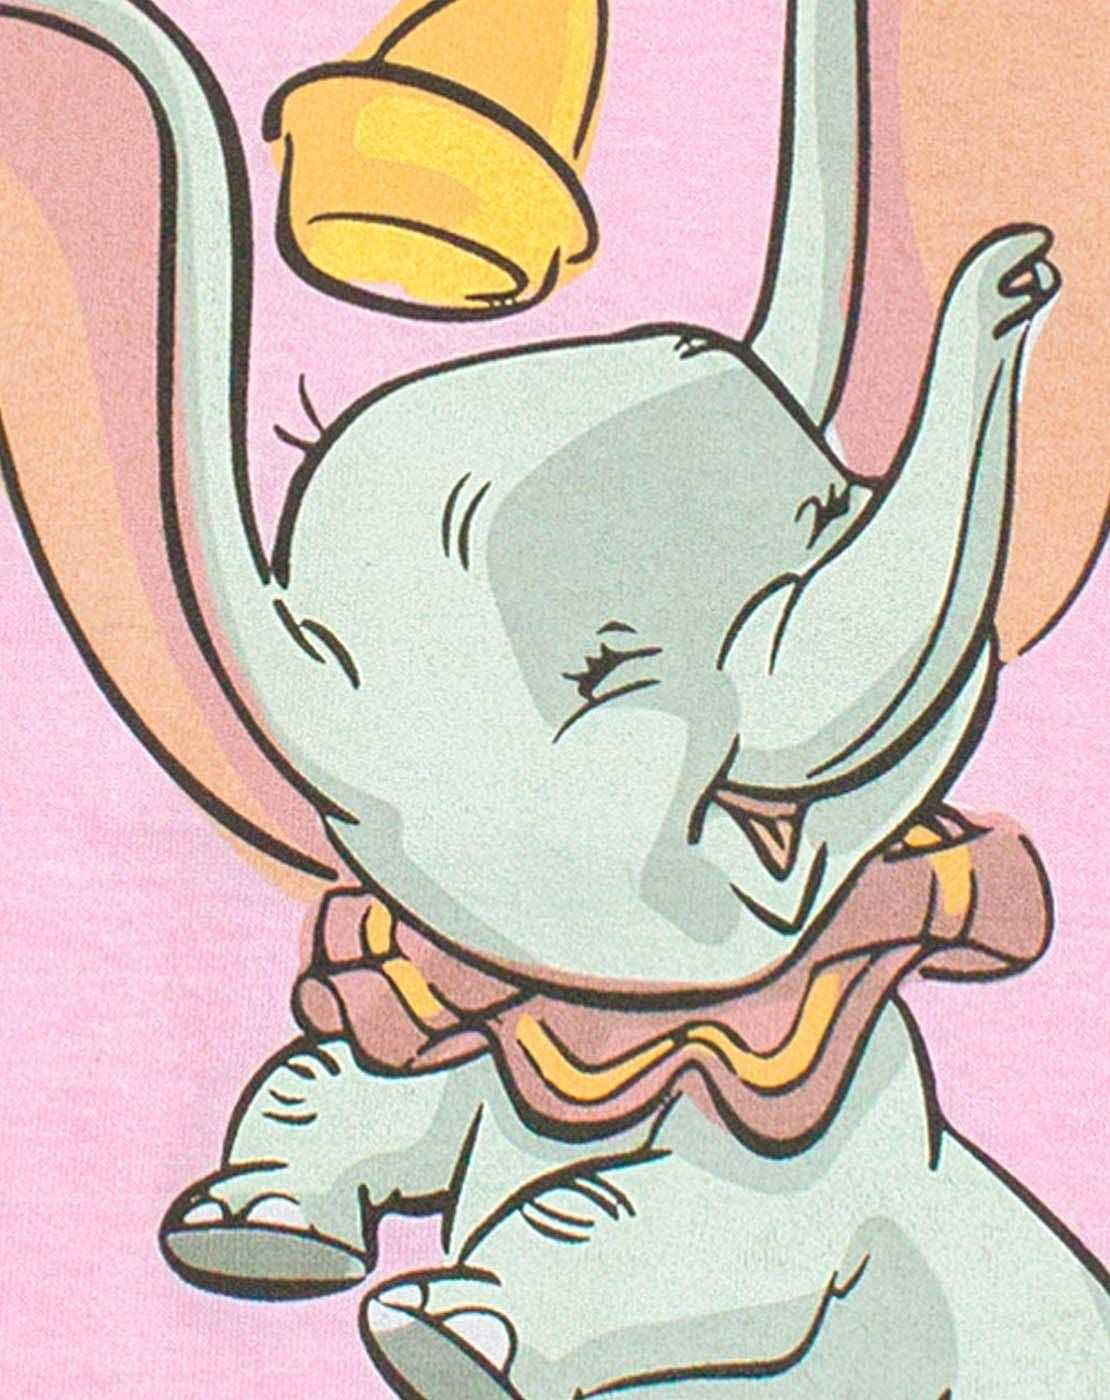 Dumbo Movie 4K Wallpapers